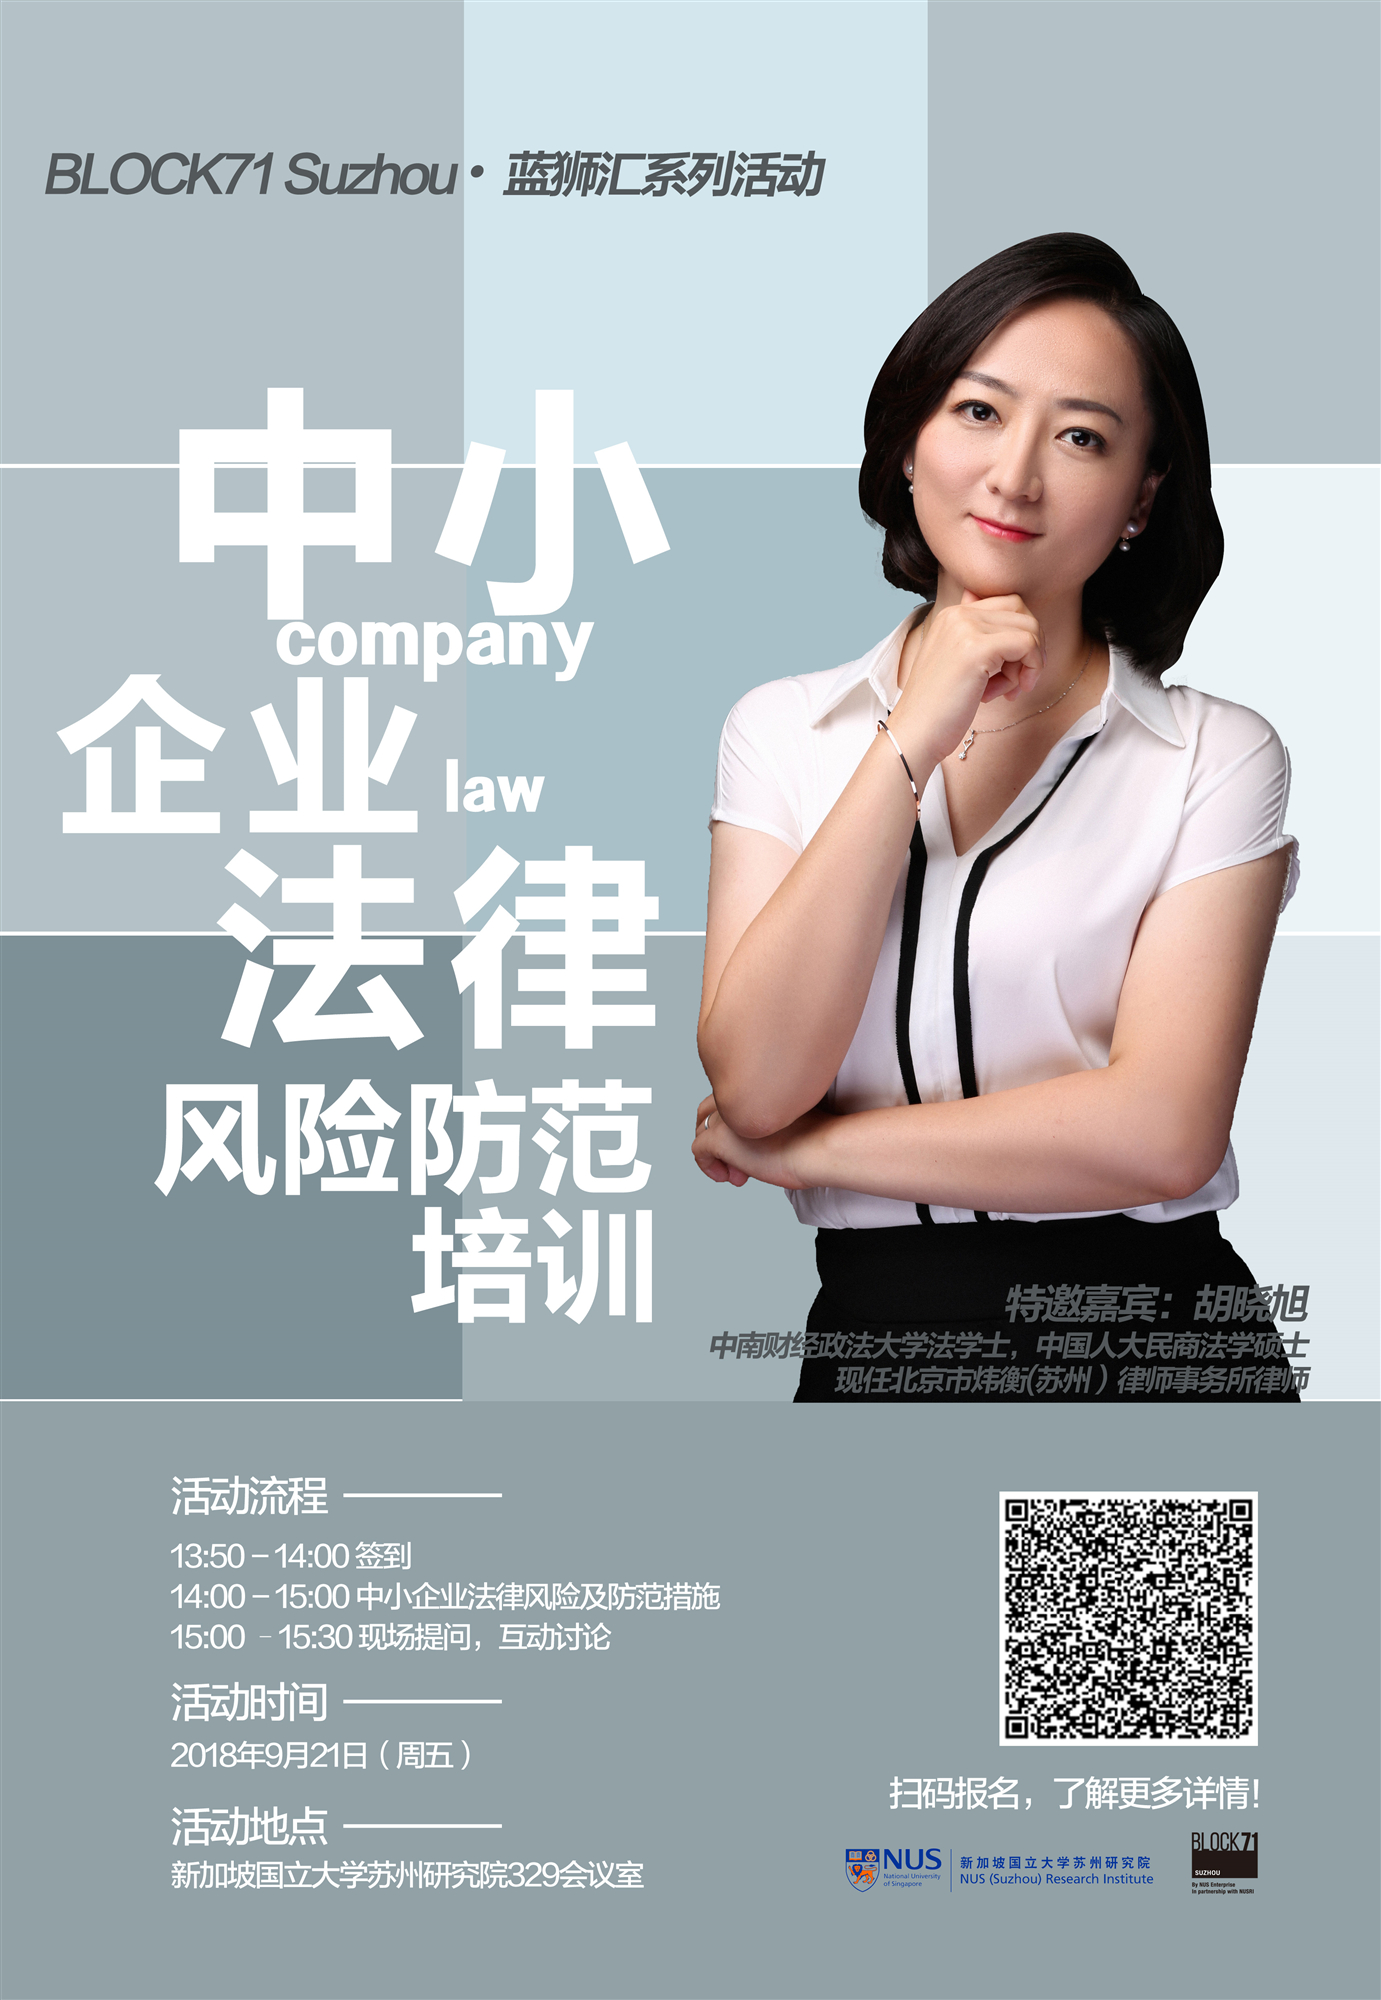 BLOCK71 Suzhou Workshop:Q&A of start-ups' legal issue